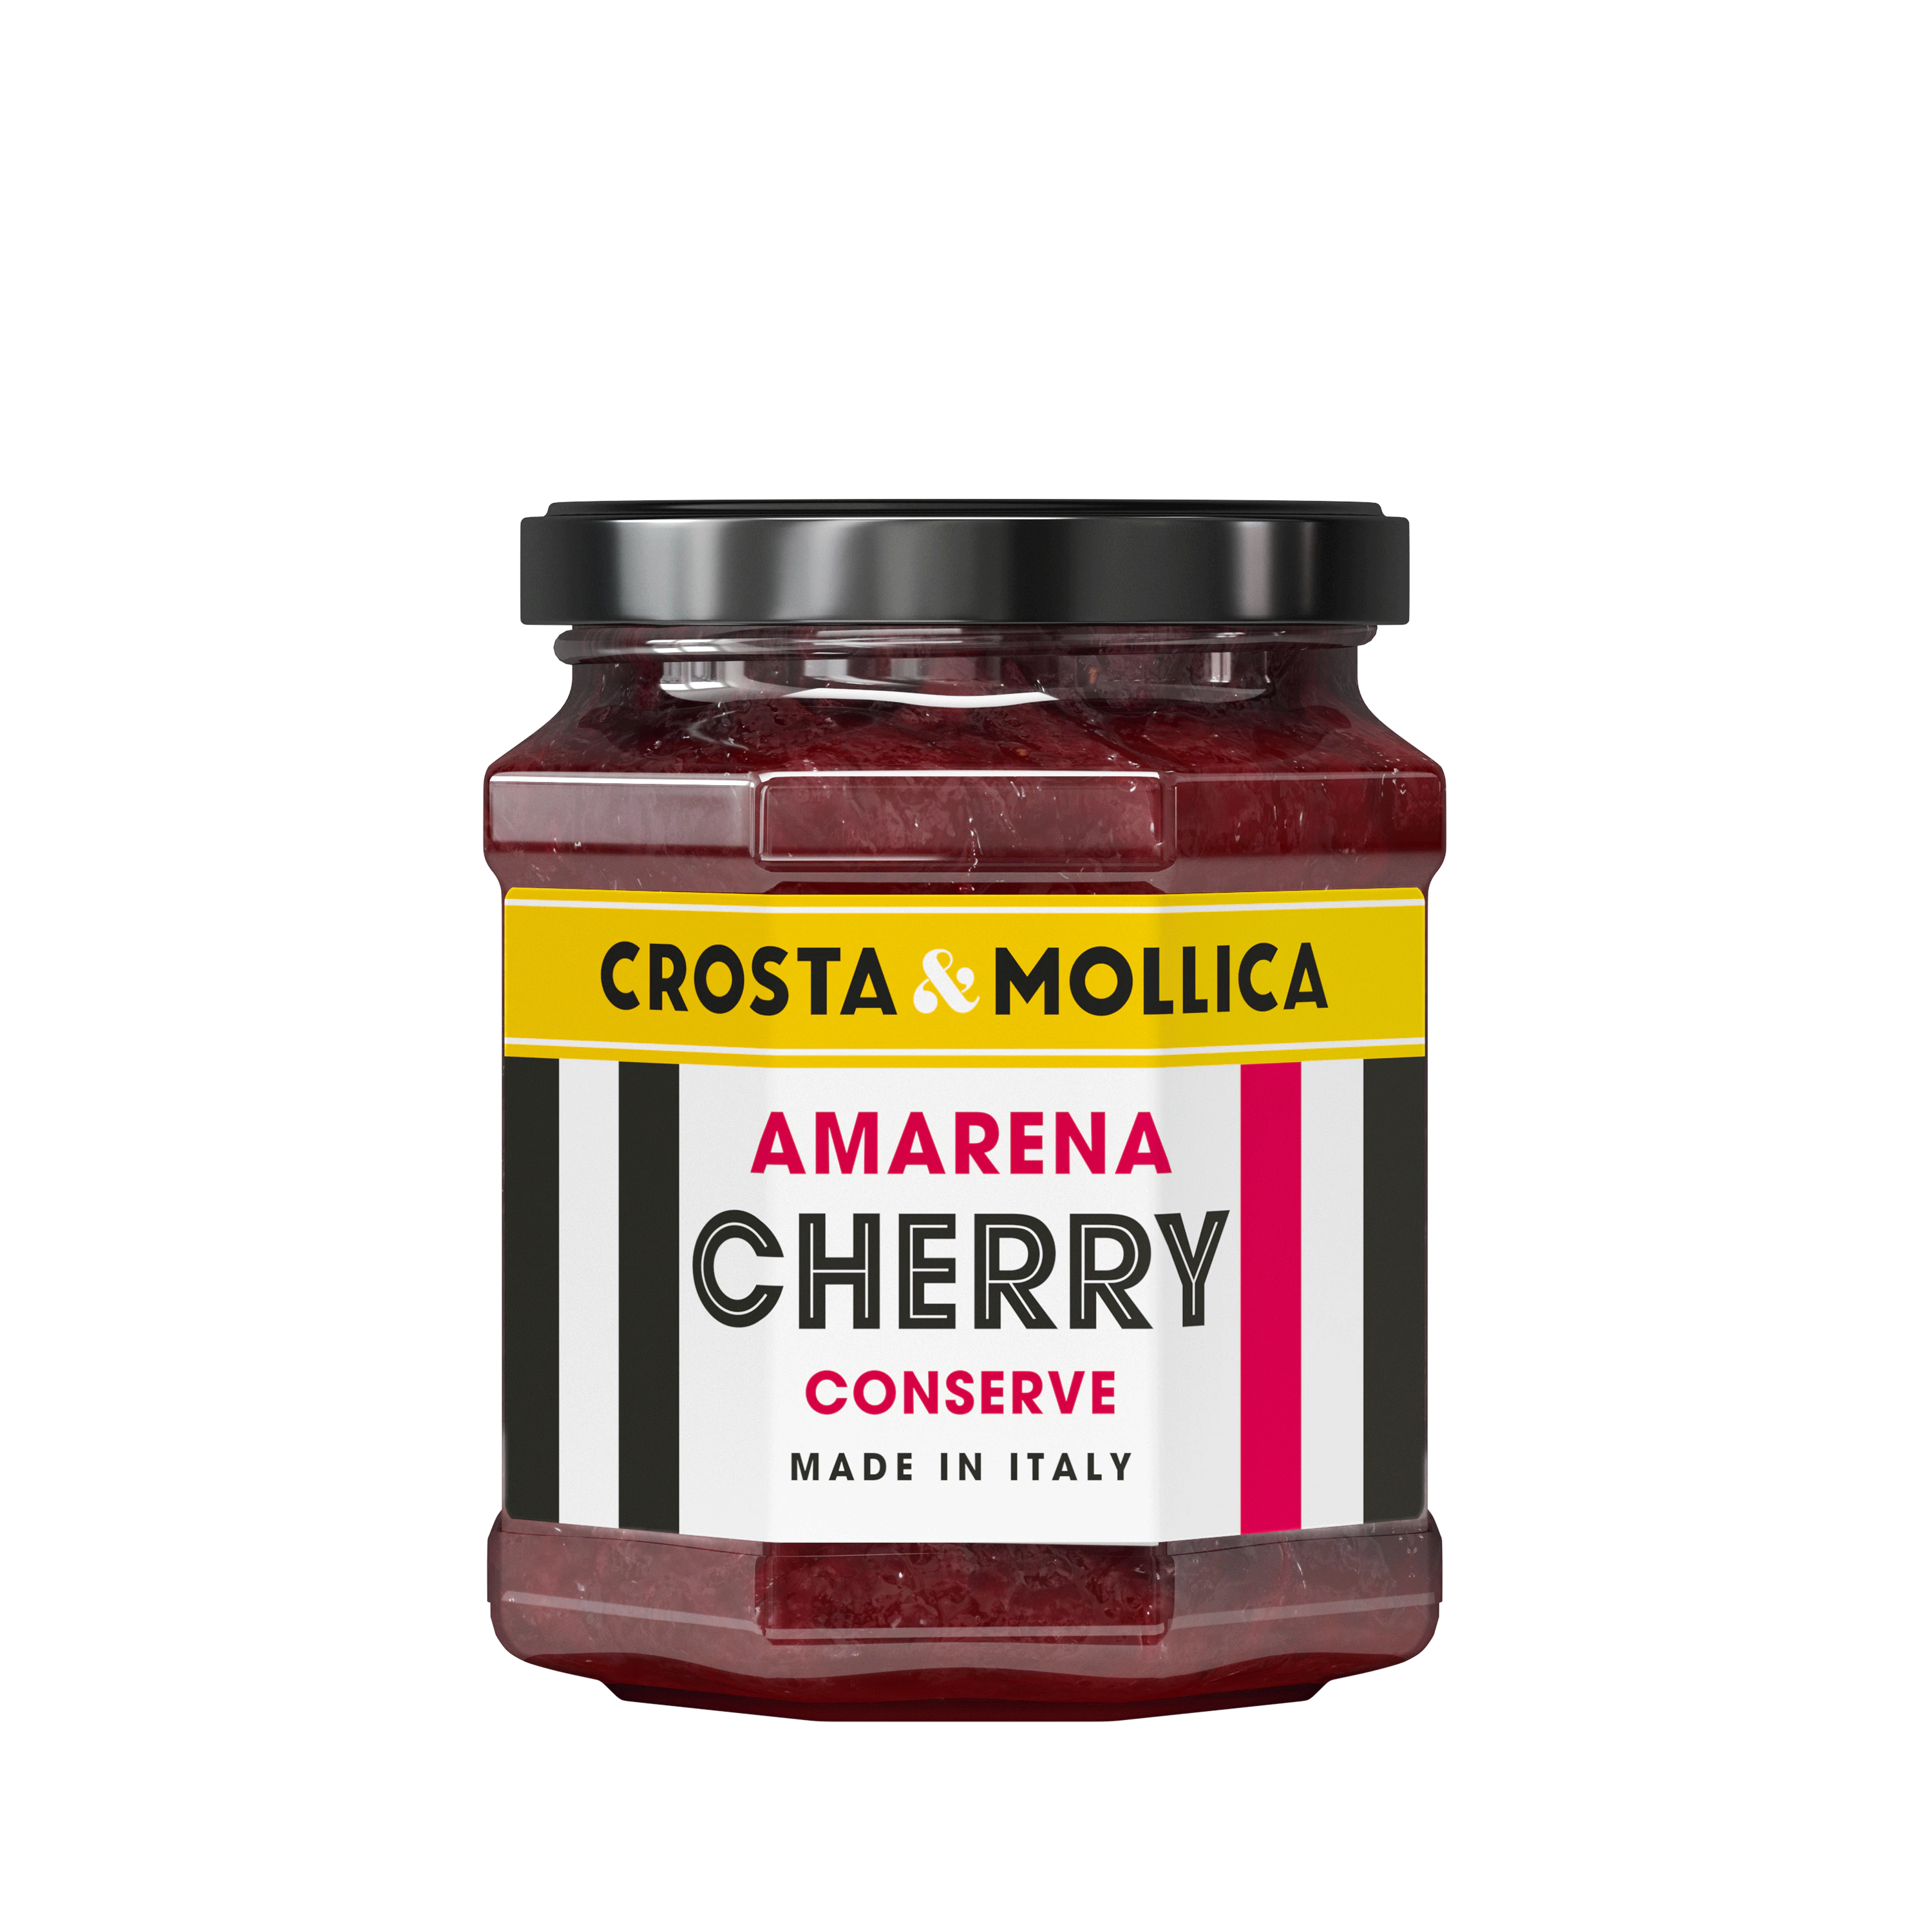 A jar of cherry conserve.